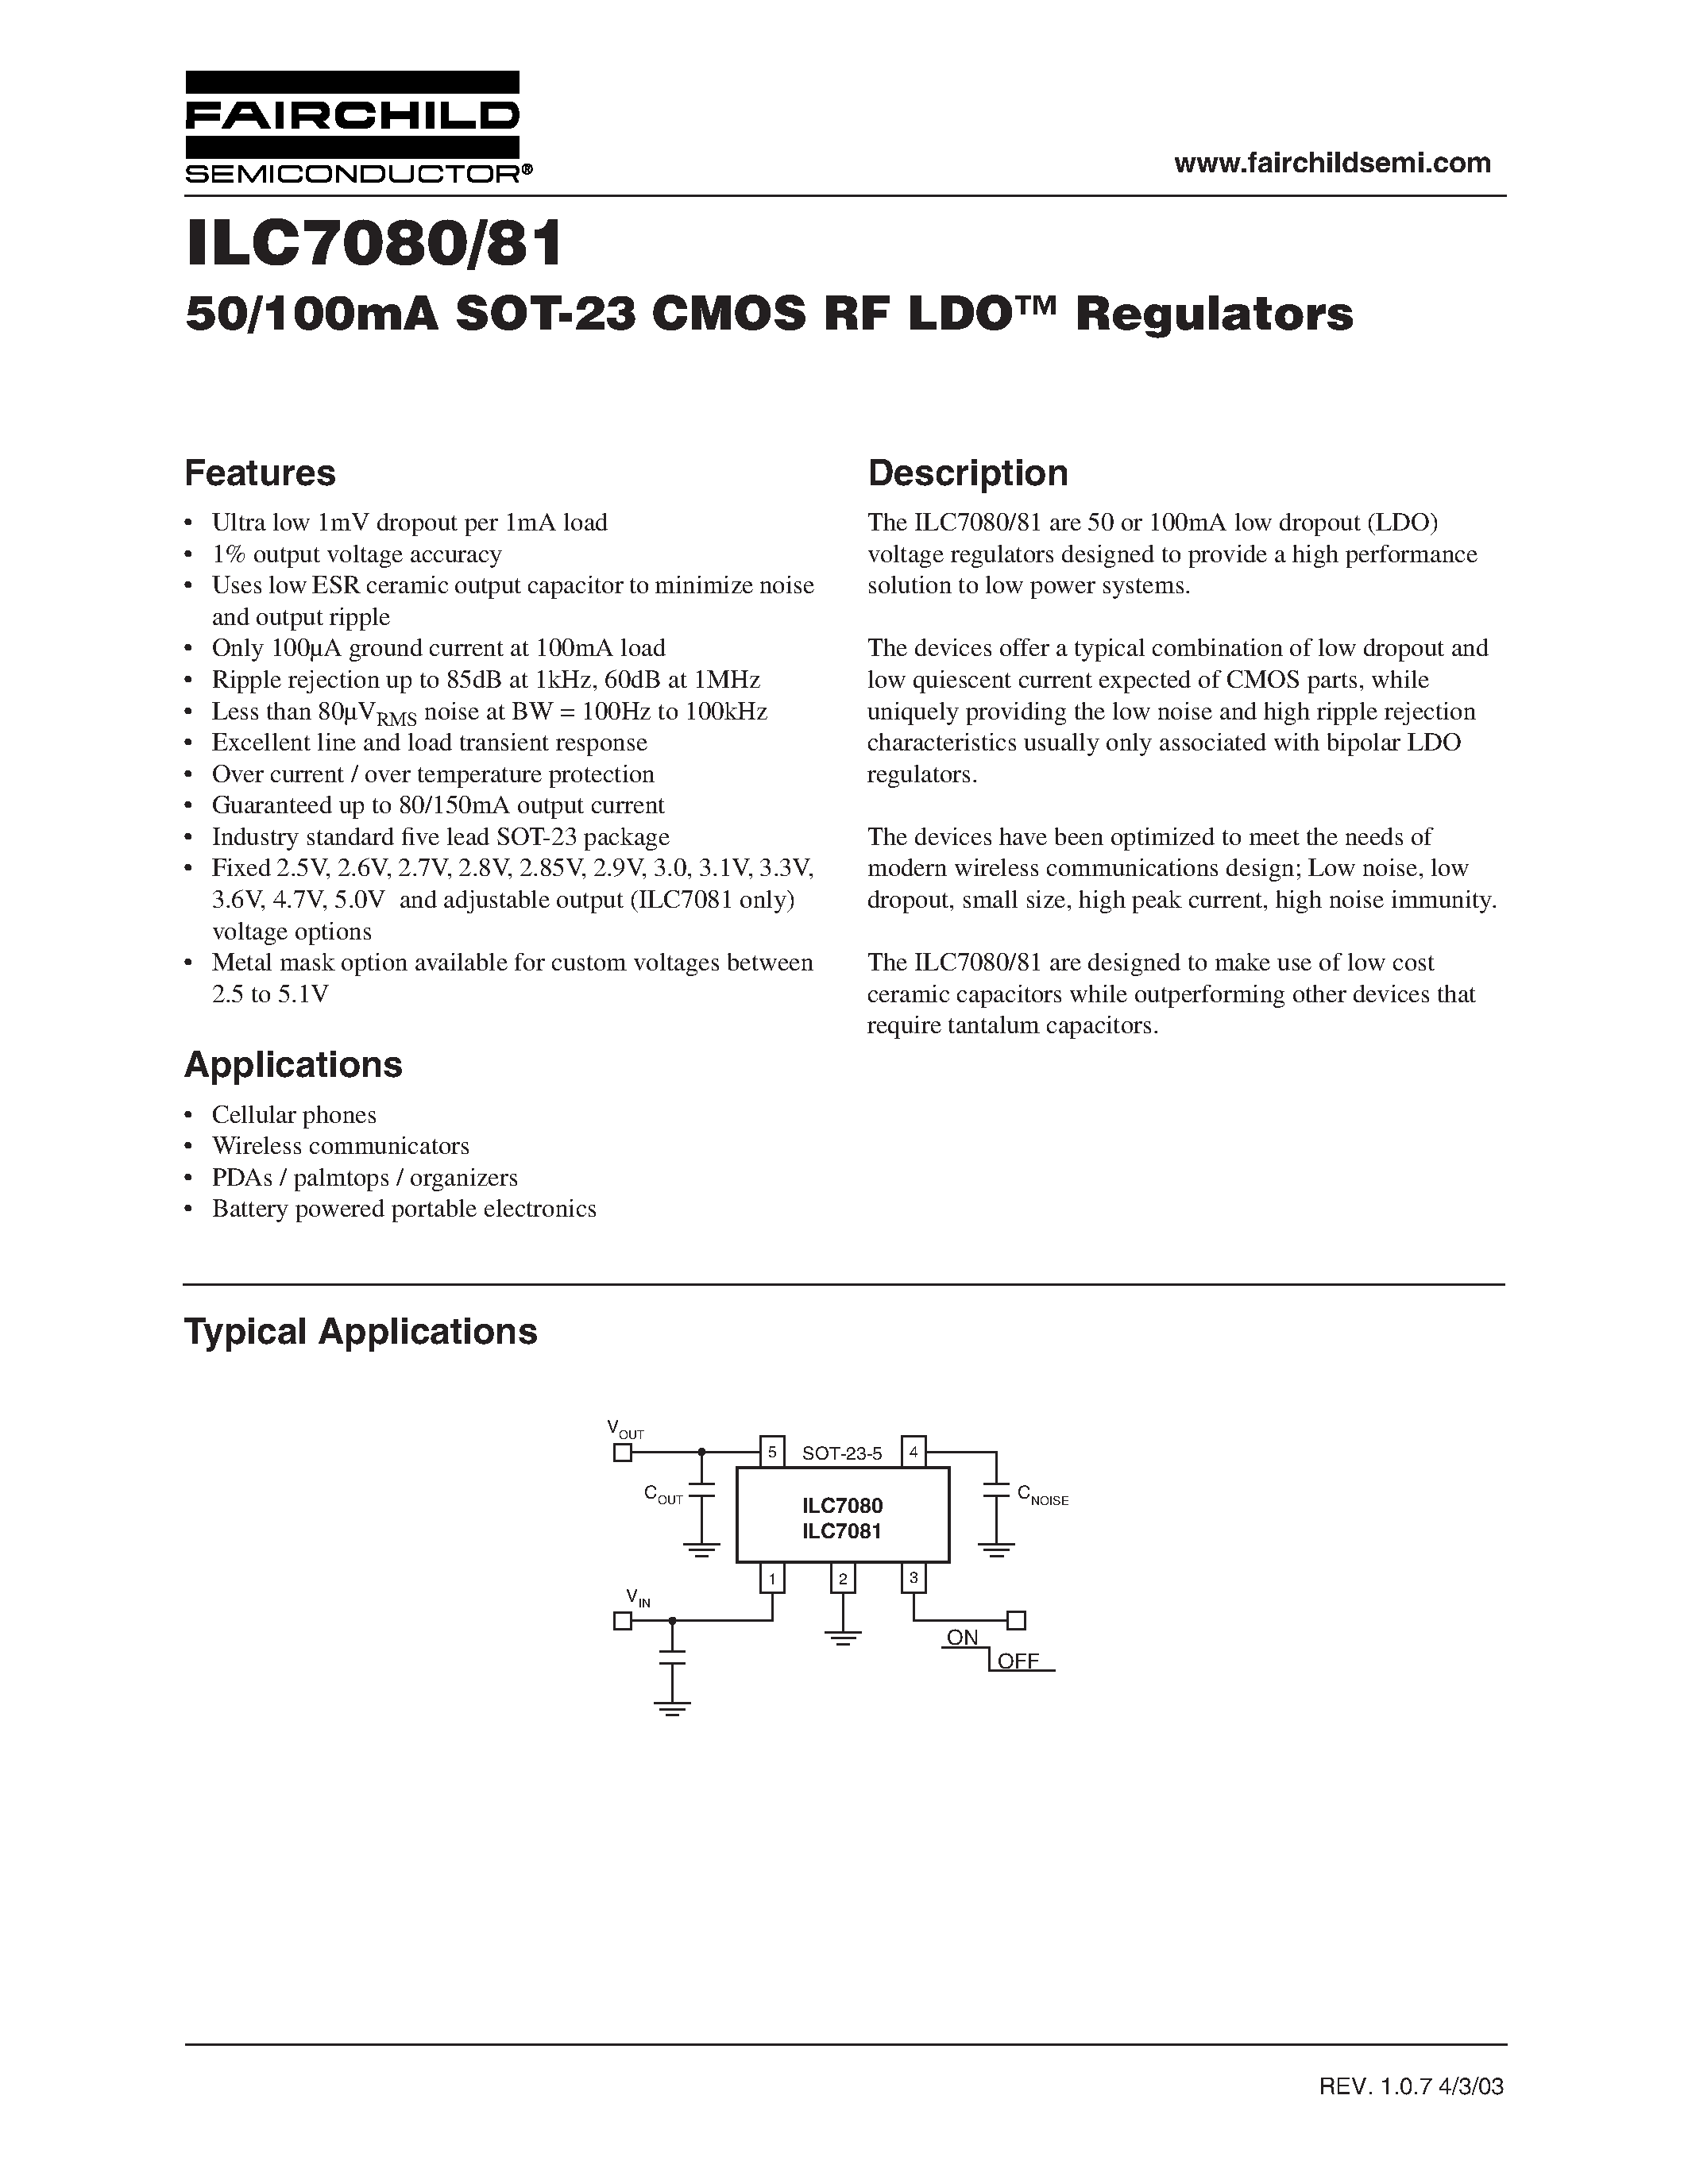 Datasheet ILC7080 - 50/100mA SOT-23 CMOS RF LDO Regulators page 1